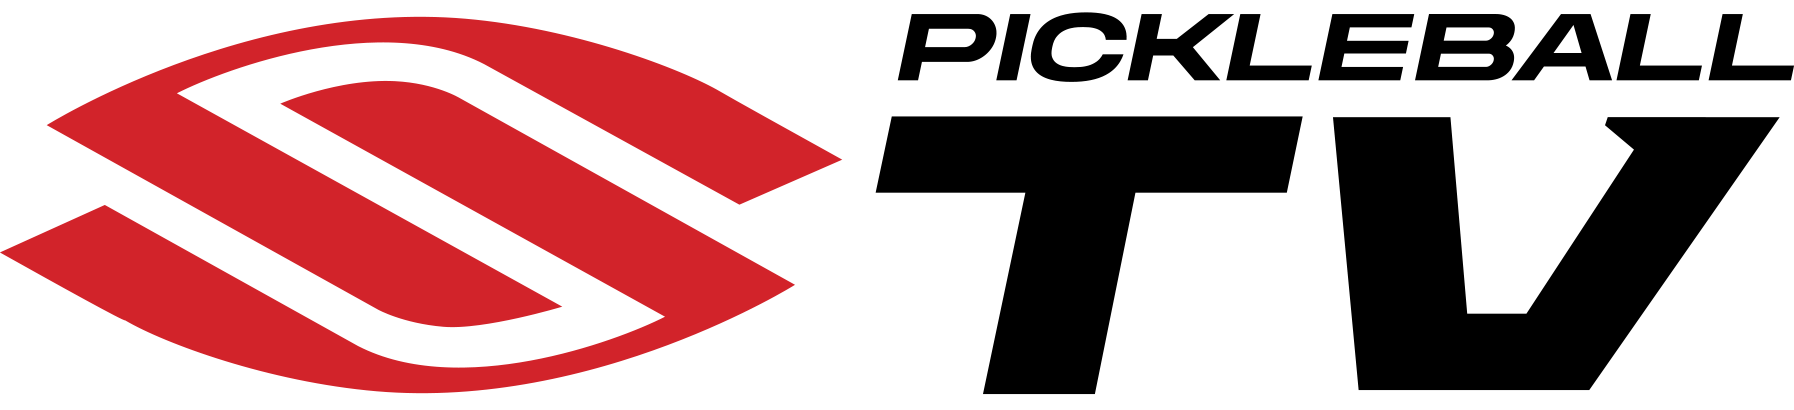 selkirk tv logo